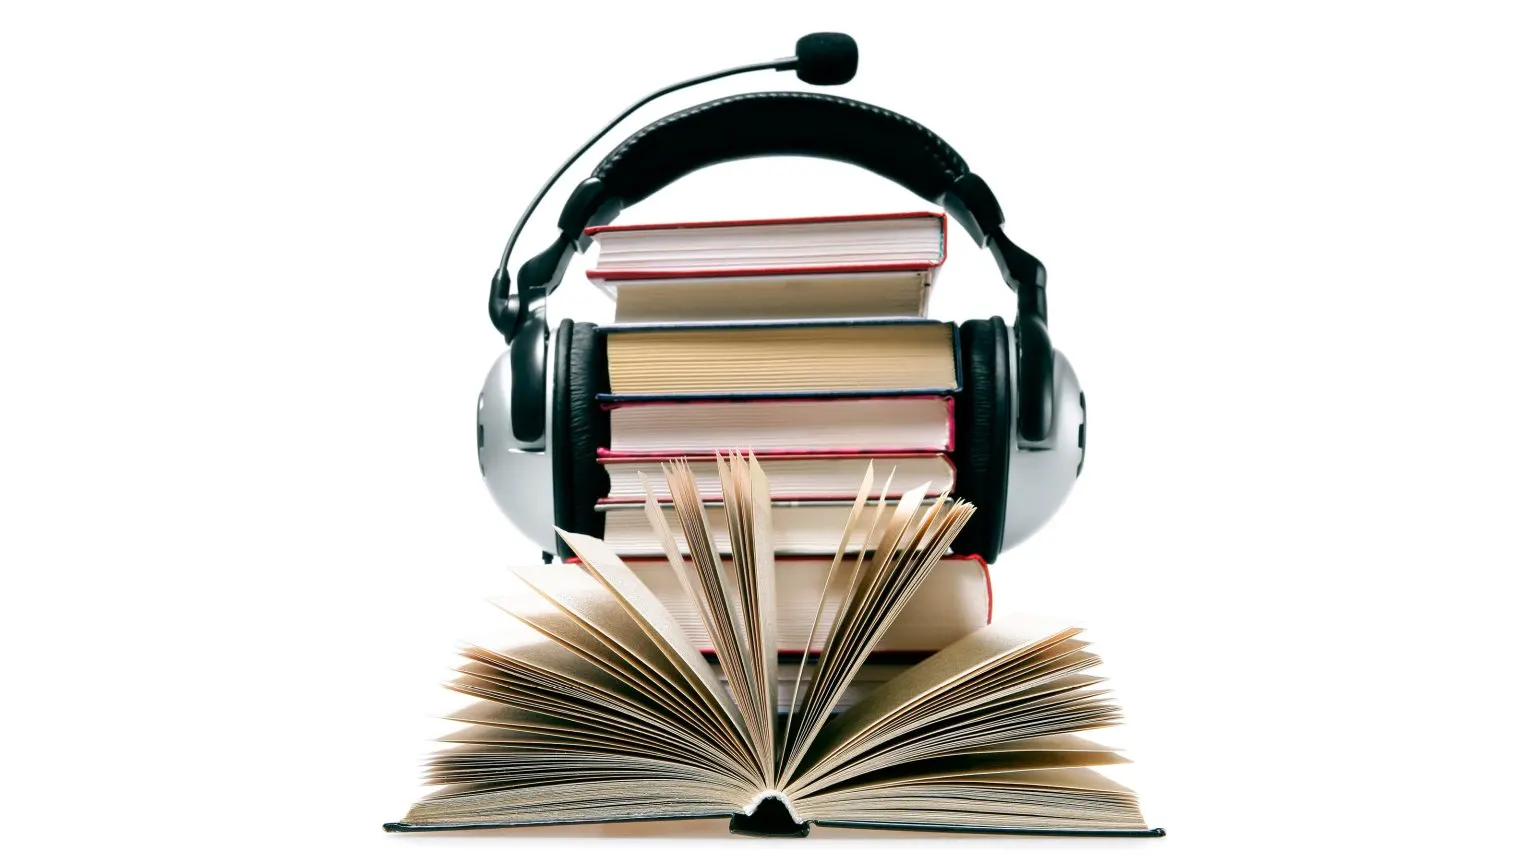 best audiobook publishers